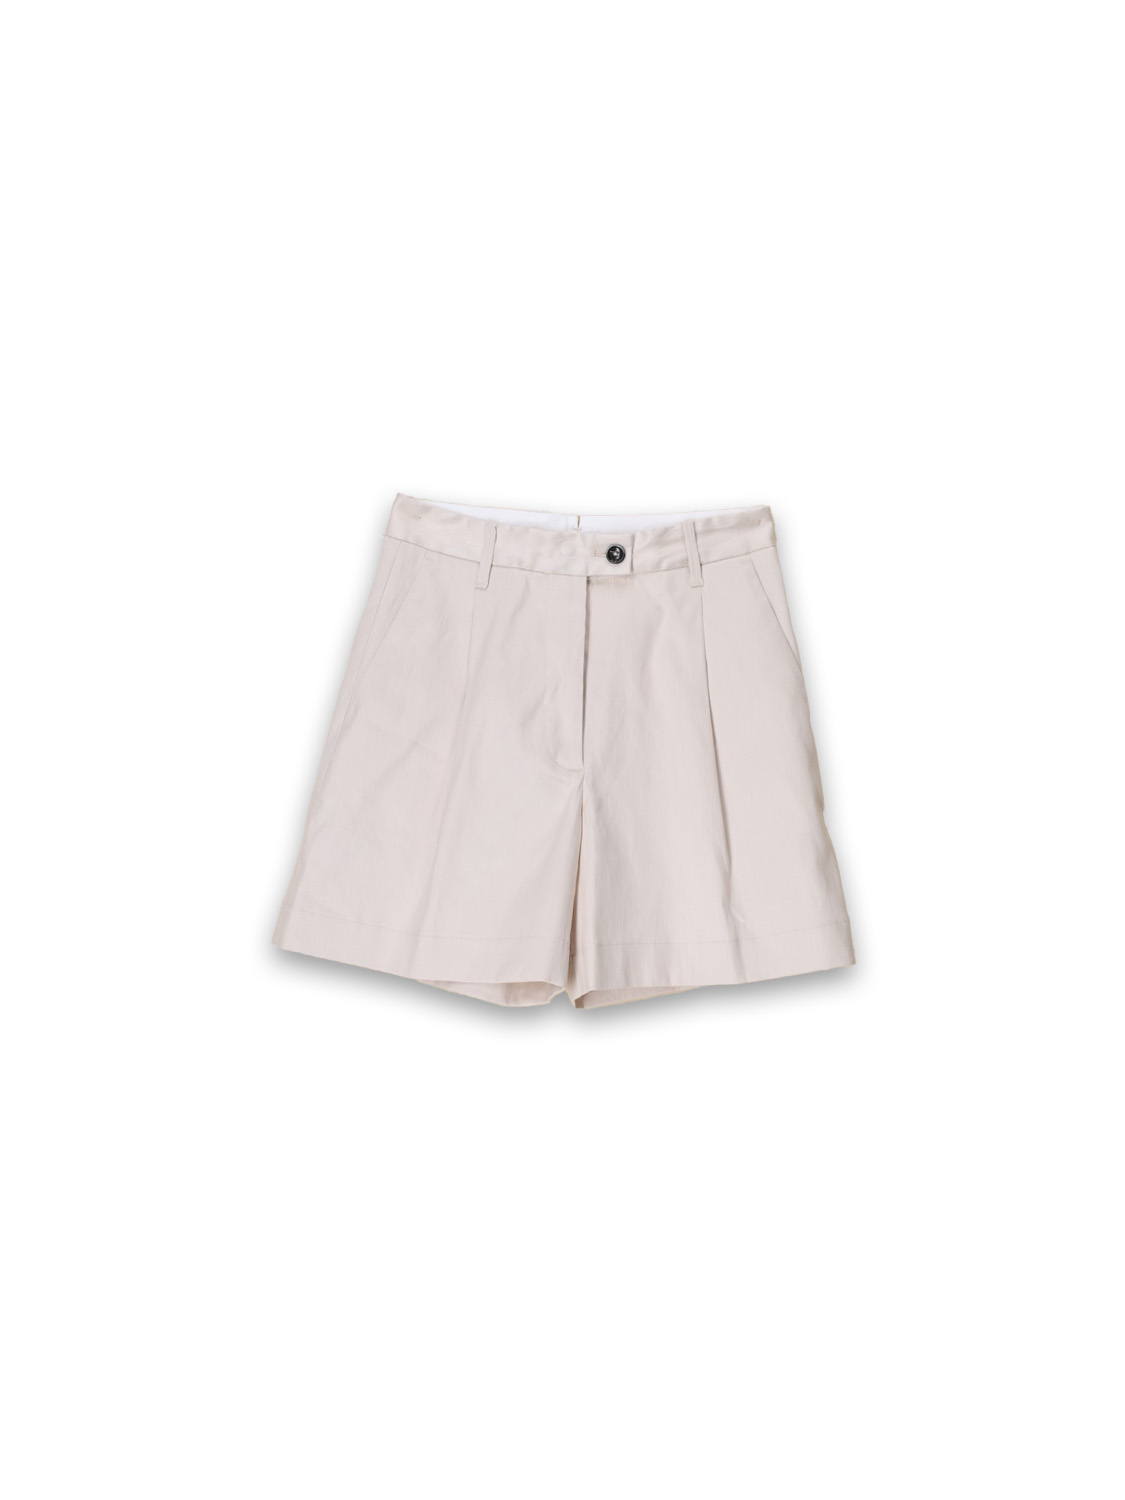 Rita shorts made from a linen-cotton mix 